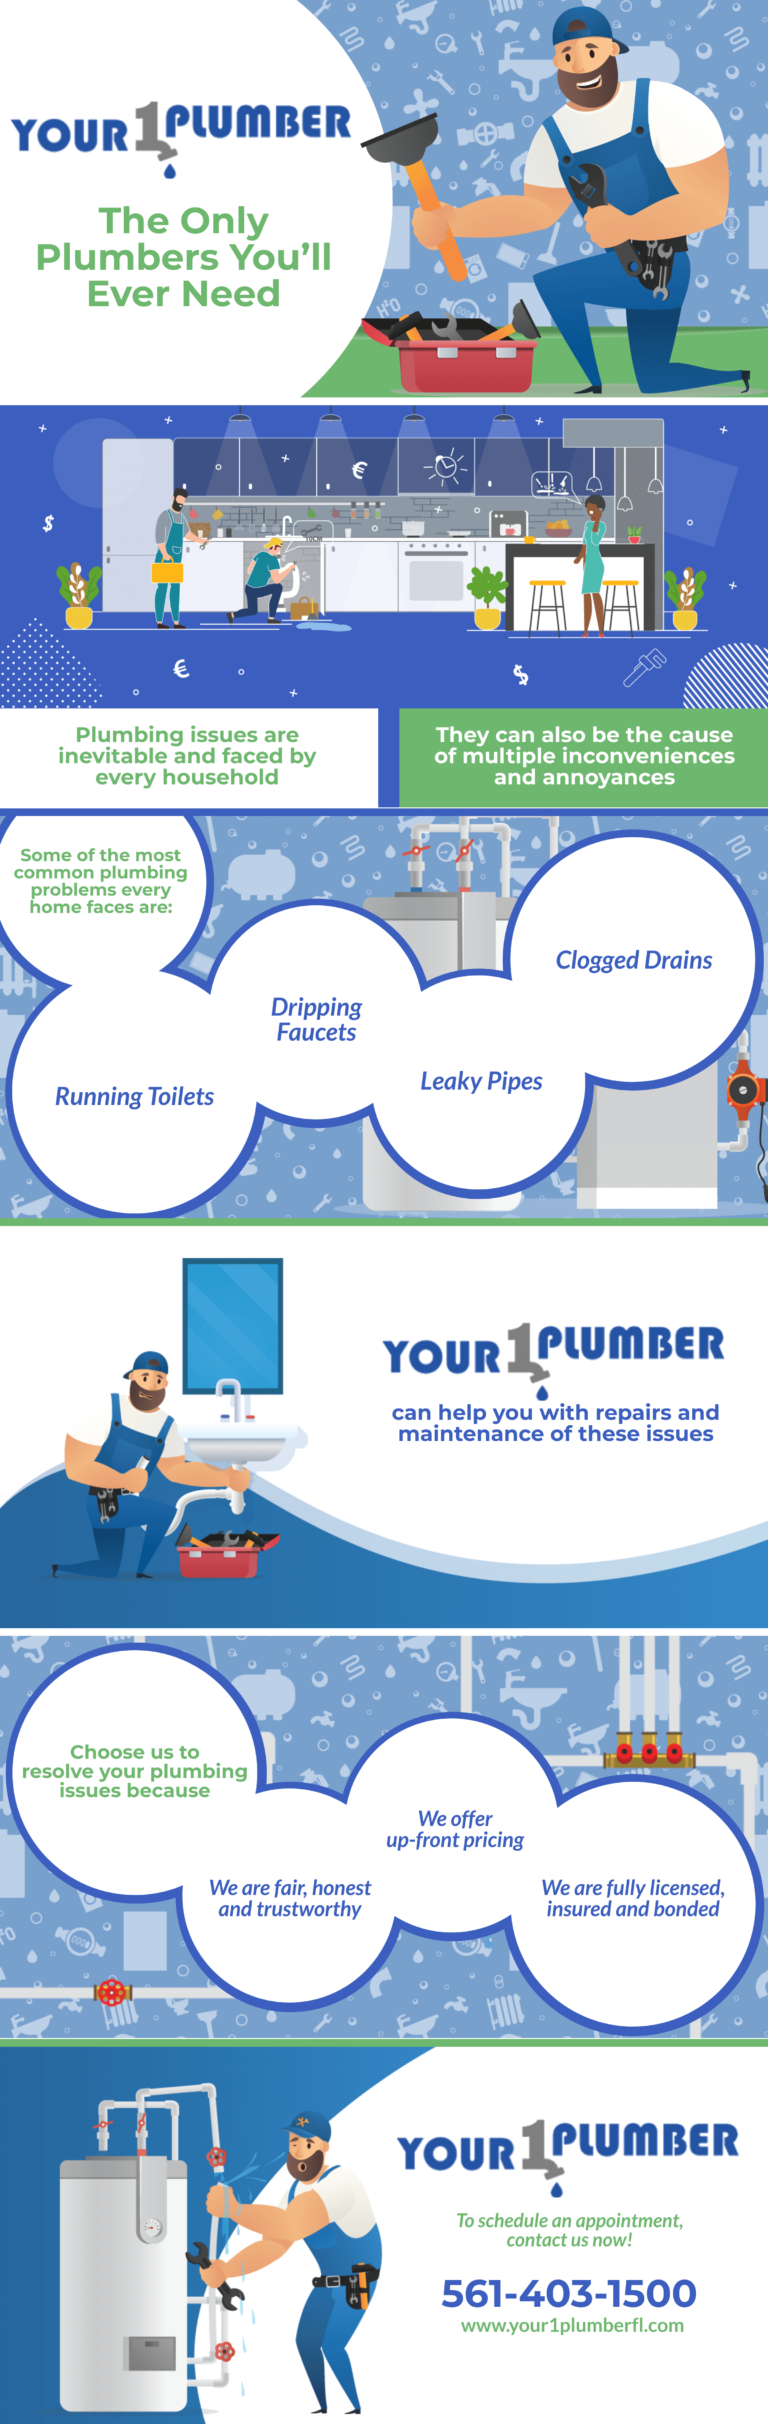 Florida plumber installer license prep class for windows download